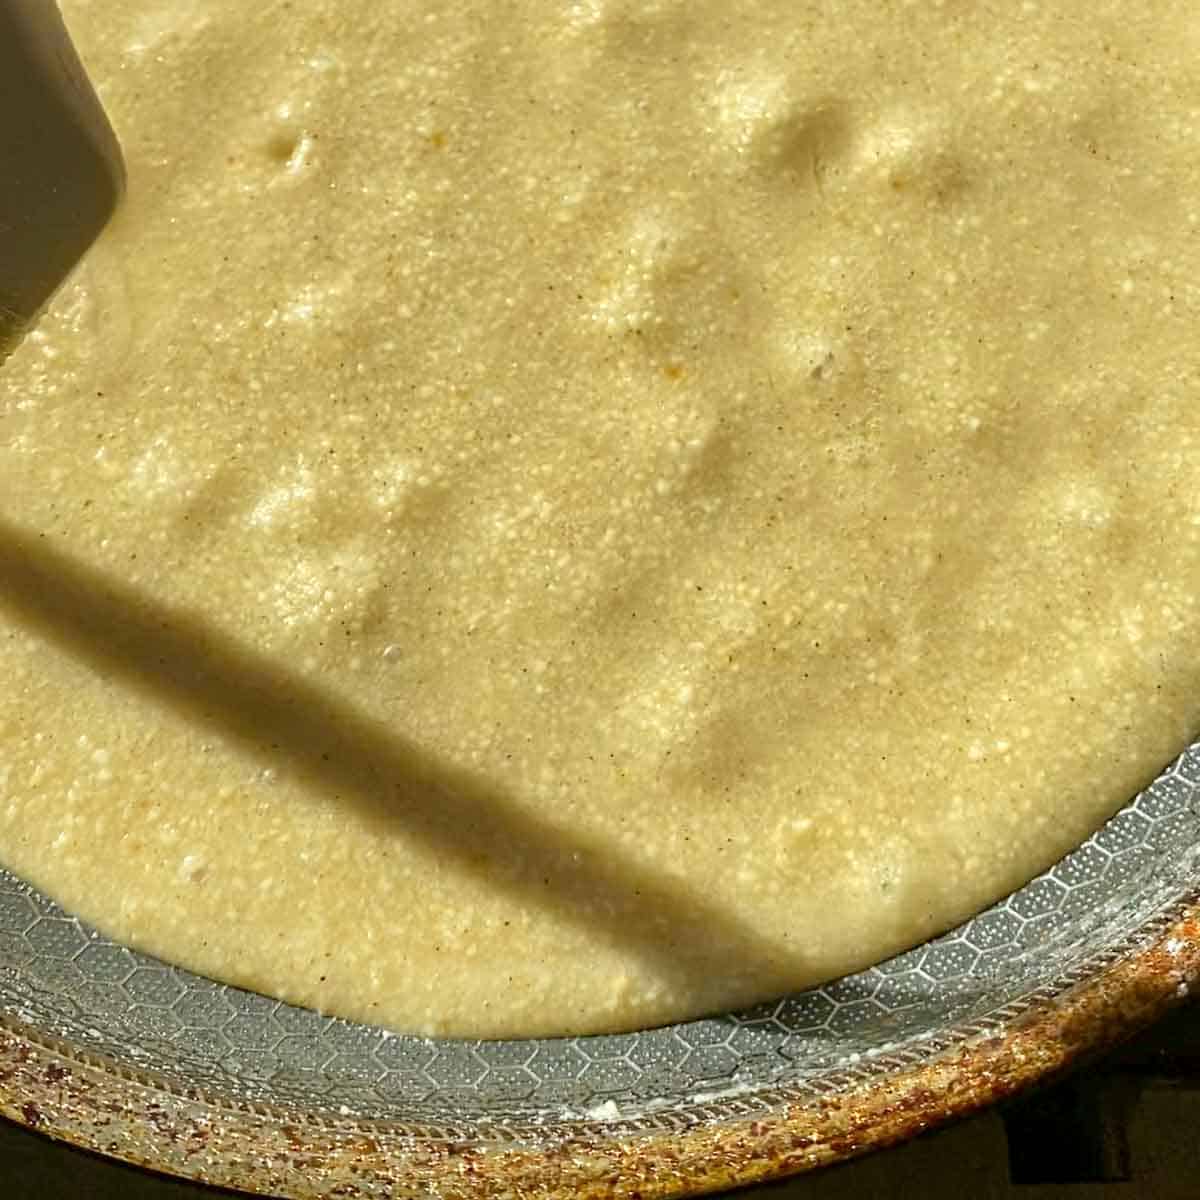 Kaju katli dough when it is undercooked and still runny